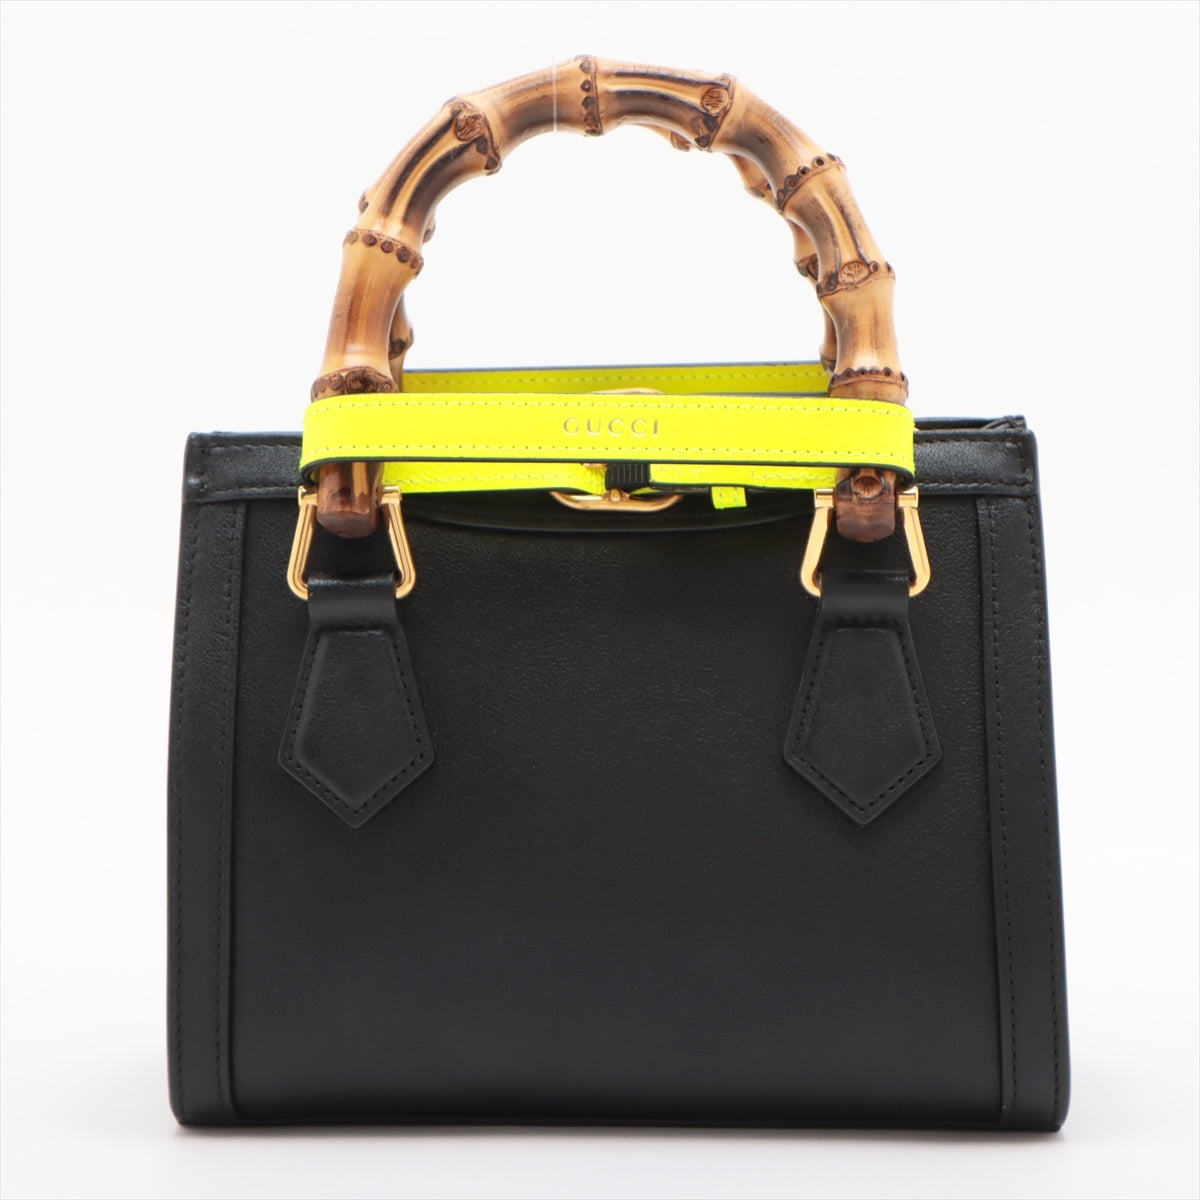 Gucci Bamboo Diana Leather 2way handbag Black 655661